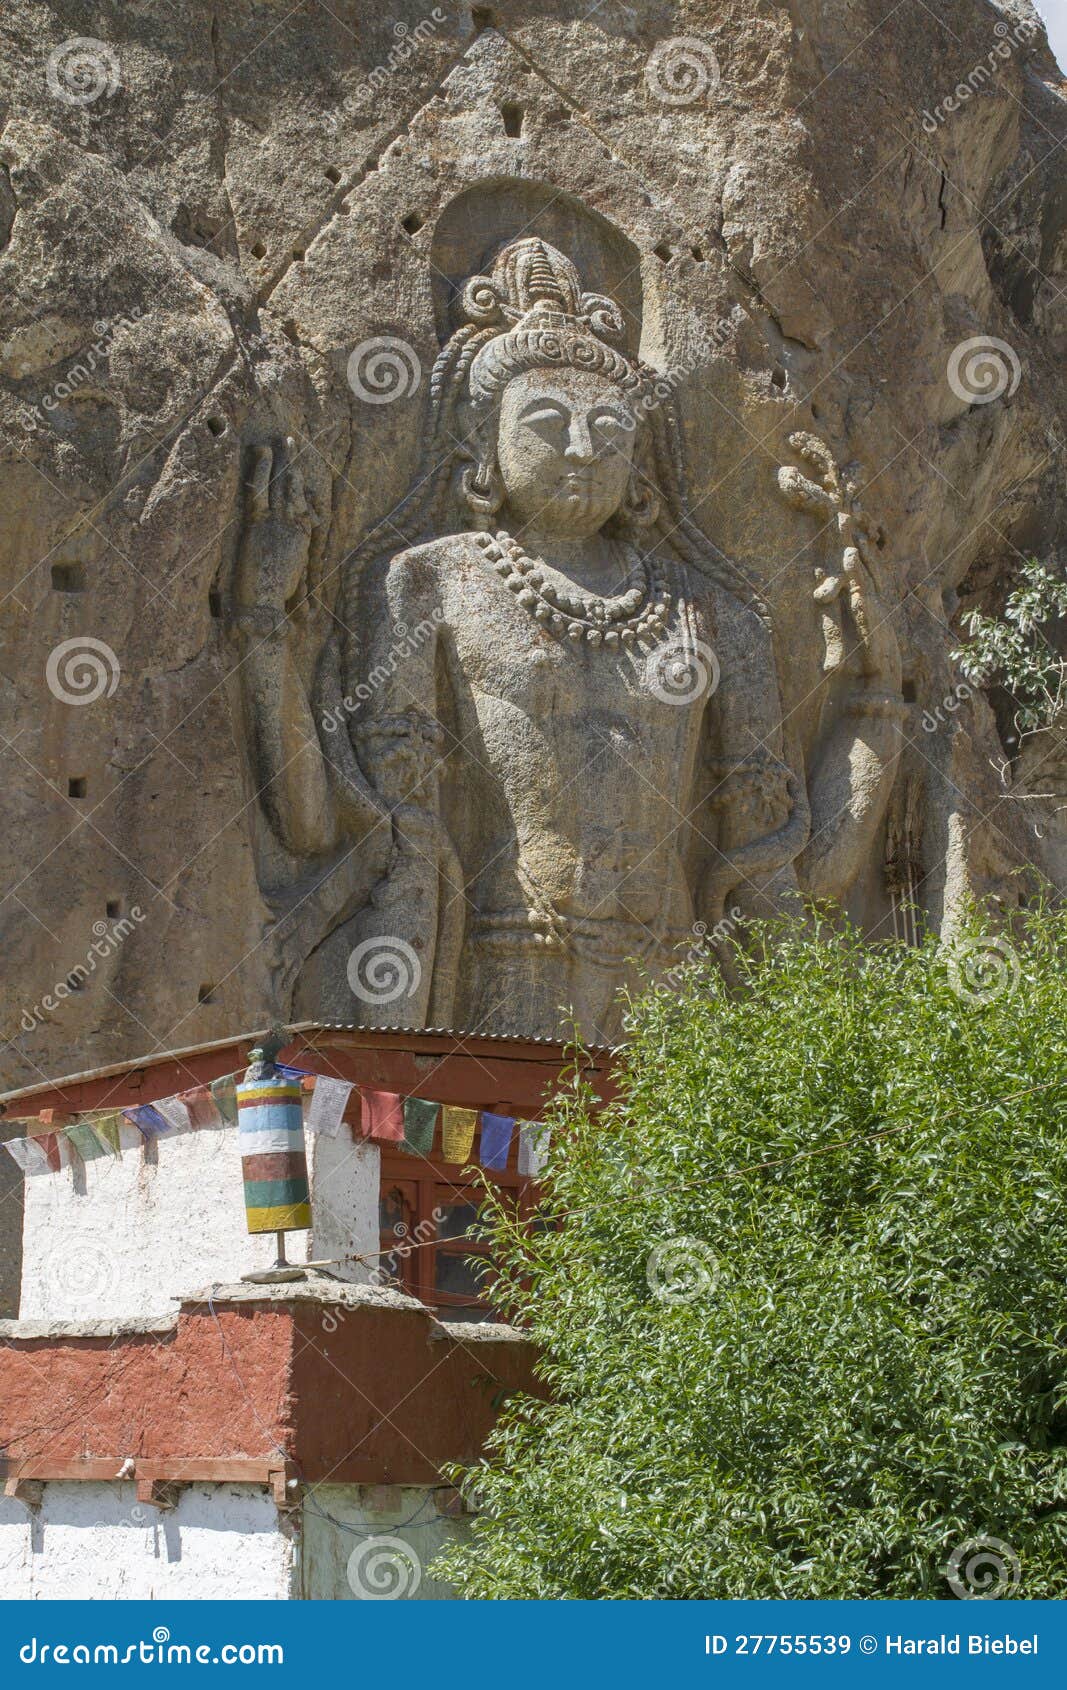 chamba statue in the village of mulbekh, ladakh